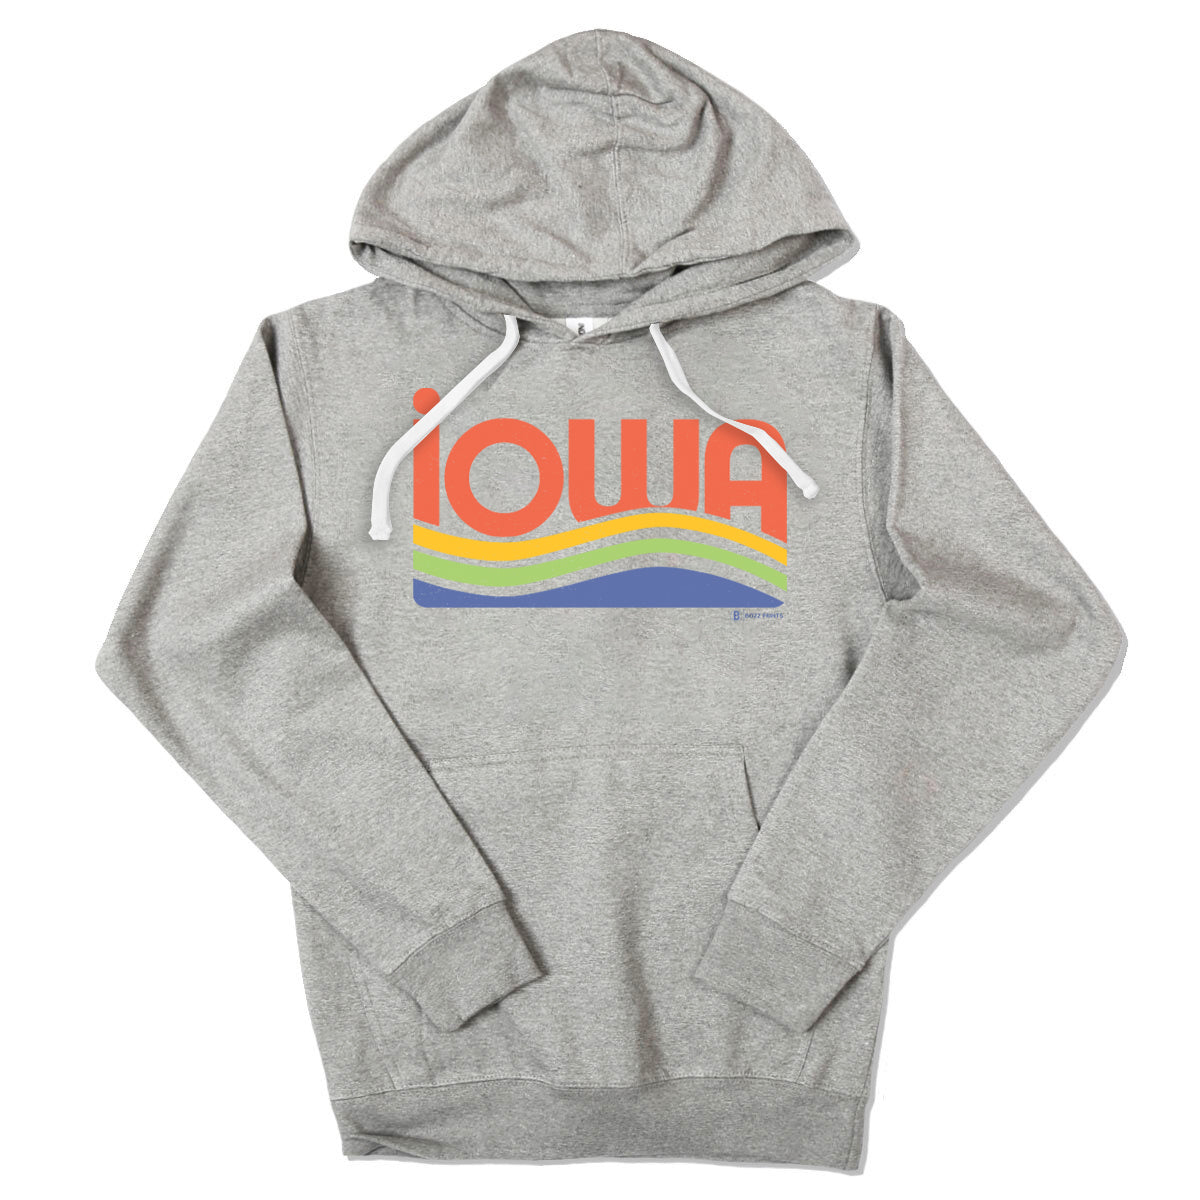 Iowa Waves Heather Grey Hooded Sweatshirt - Bozz Prints